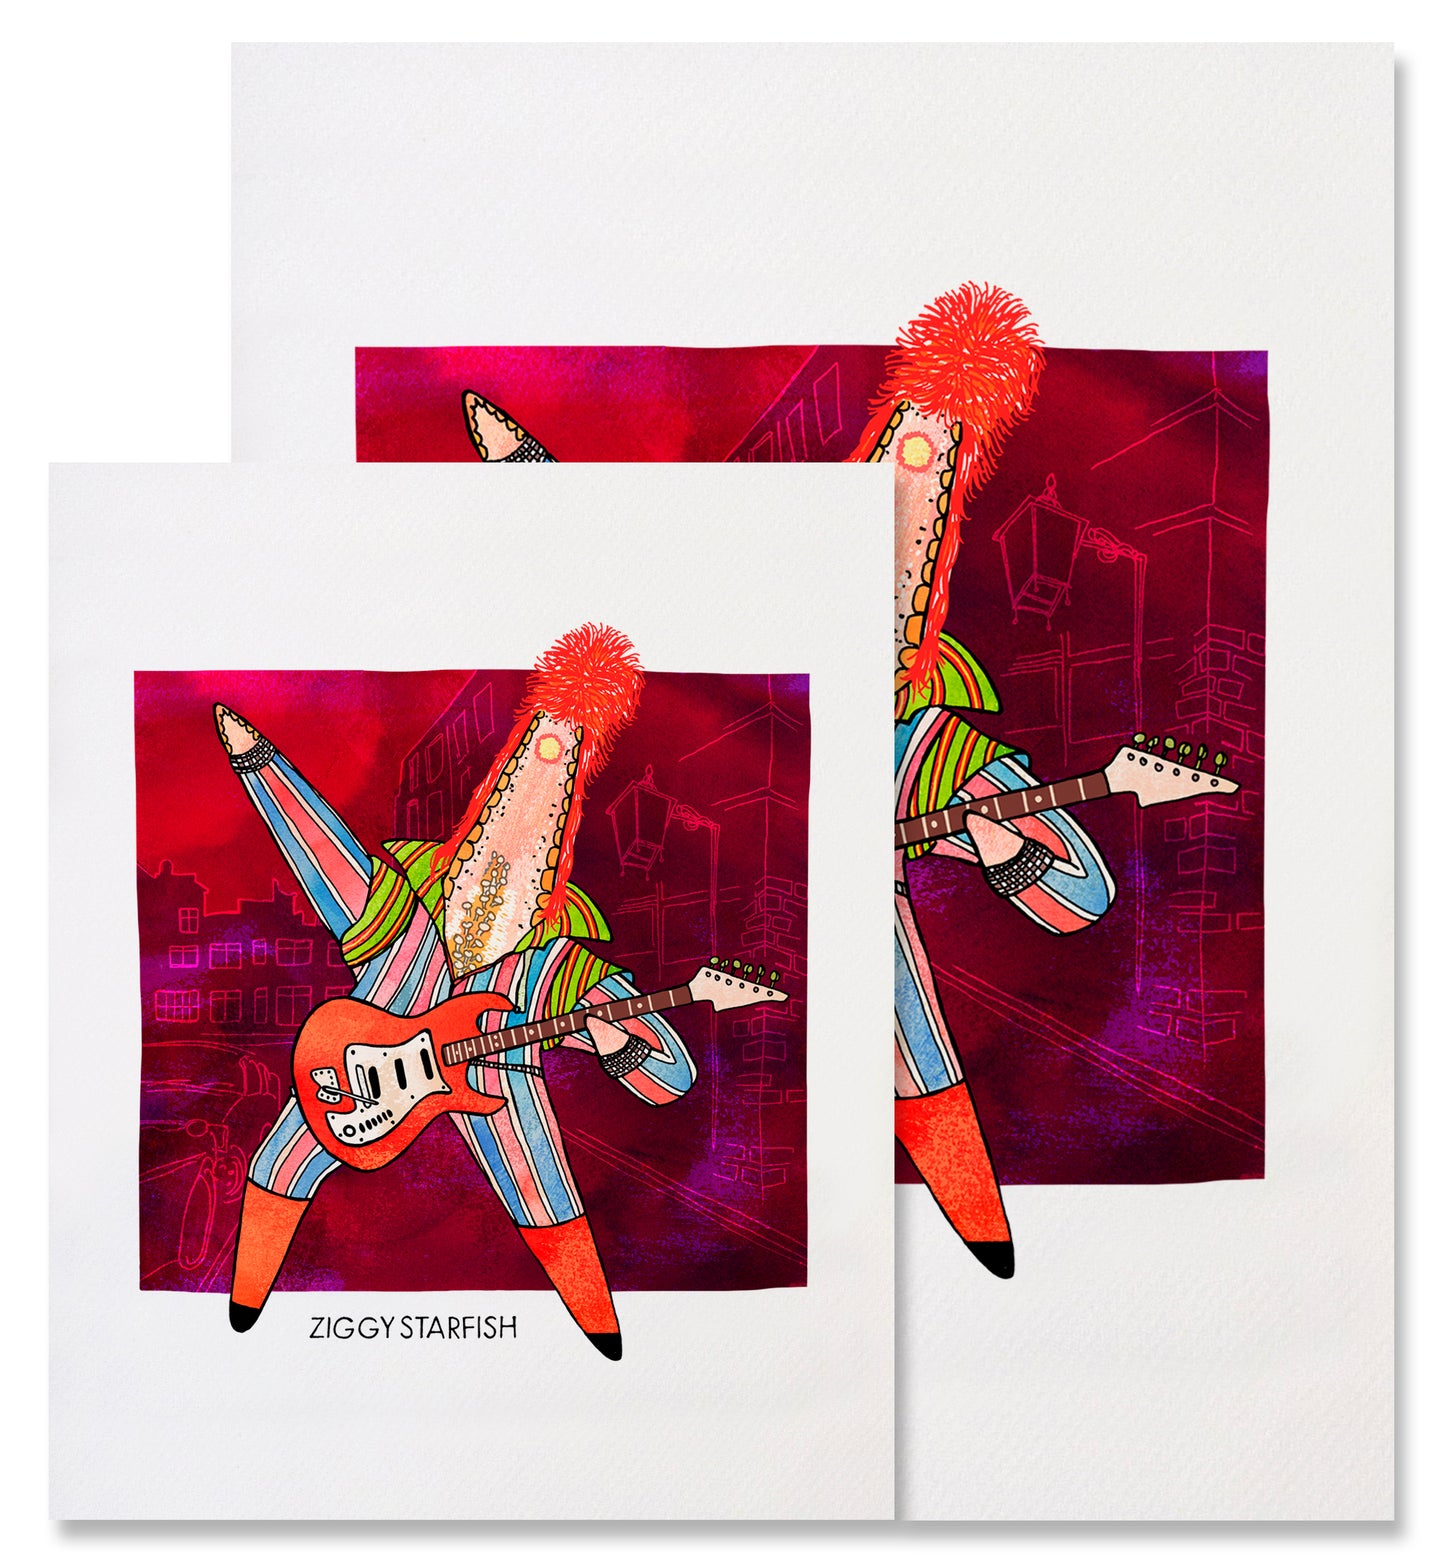 Ziggy Starfish - Illustrated Funny Pun Everyday Card